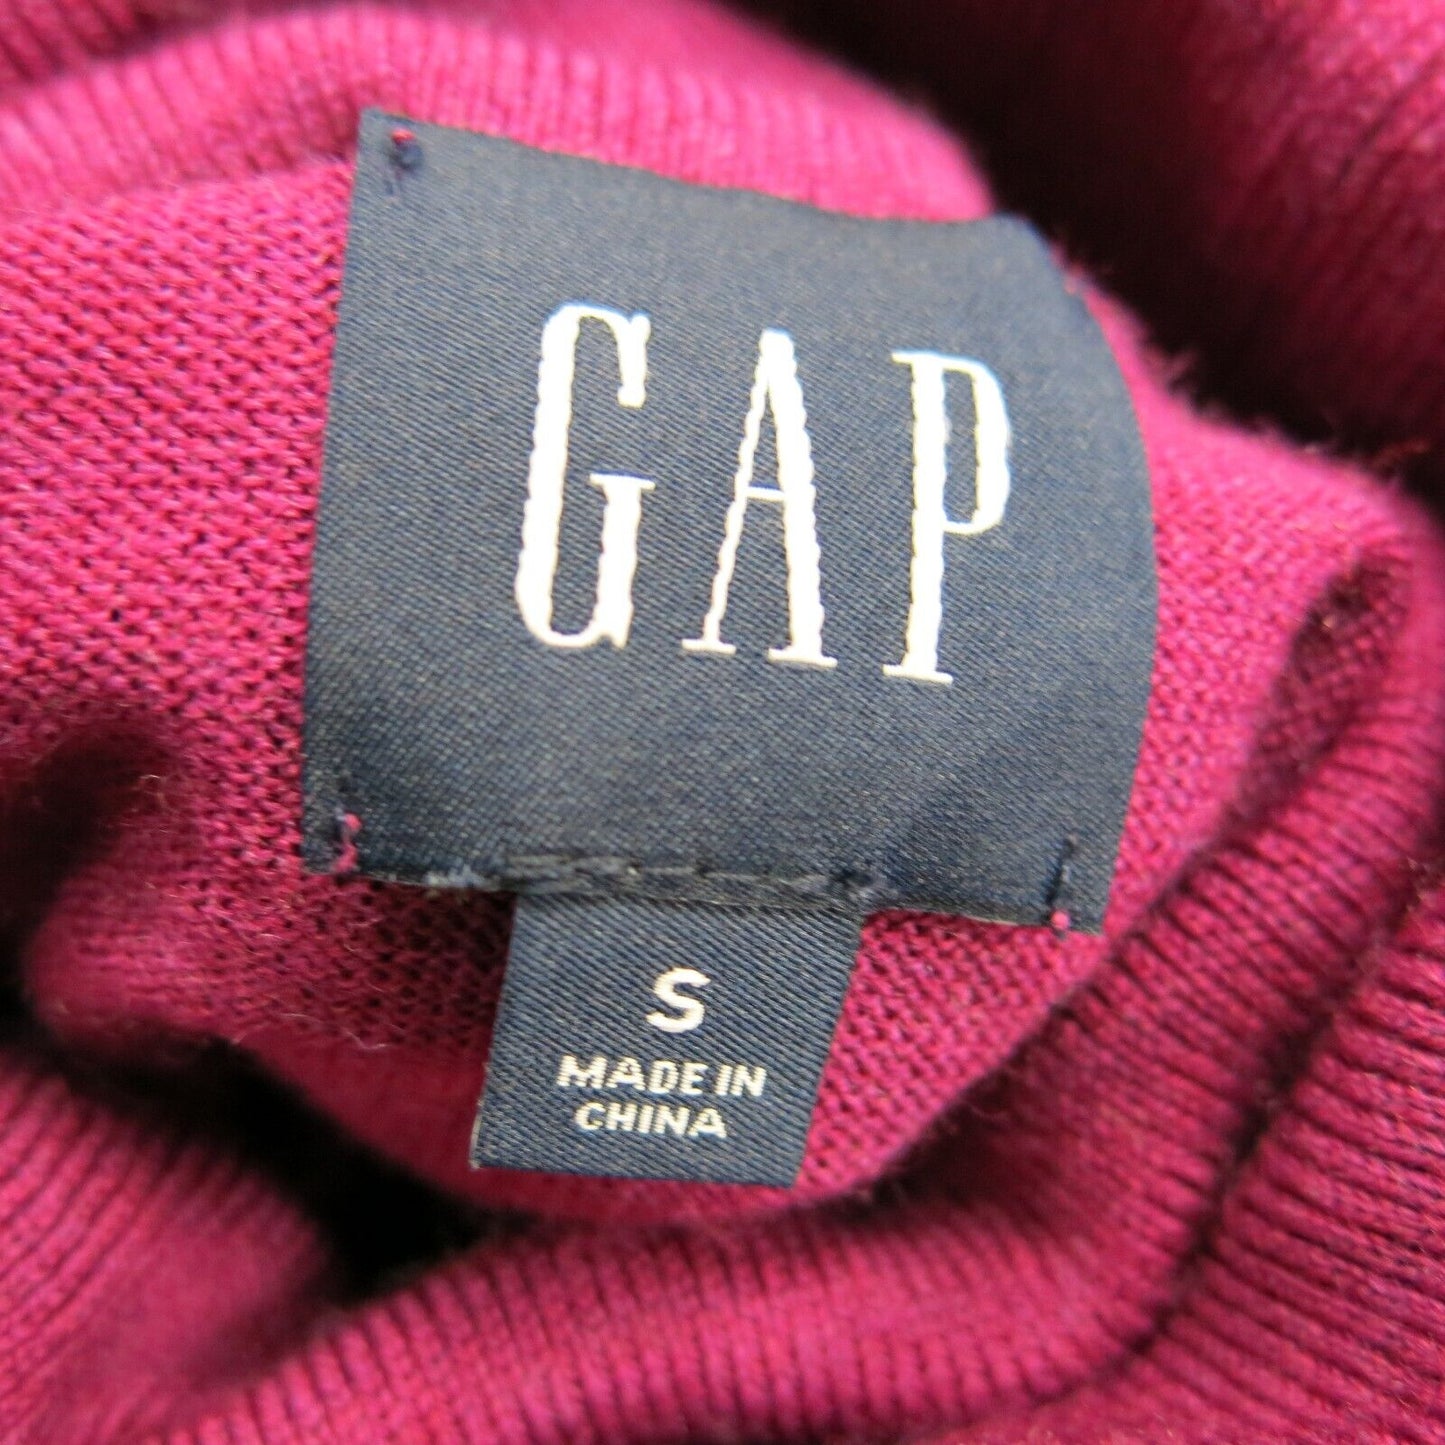 Gap Womens Pullover Knitted Sweater Top 100% Merino Wool Long Sleeve Purple S/P